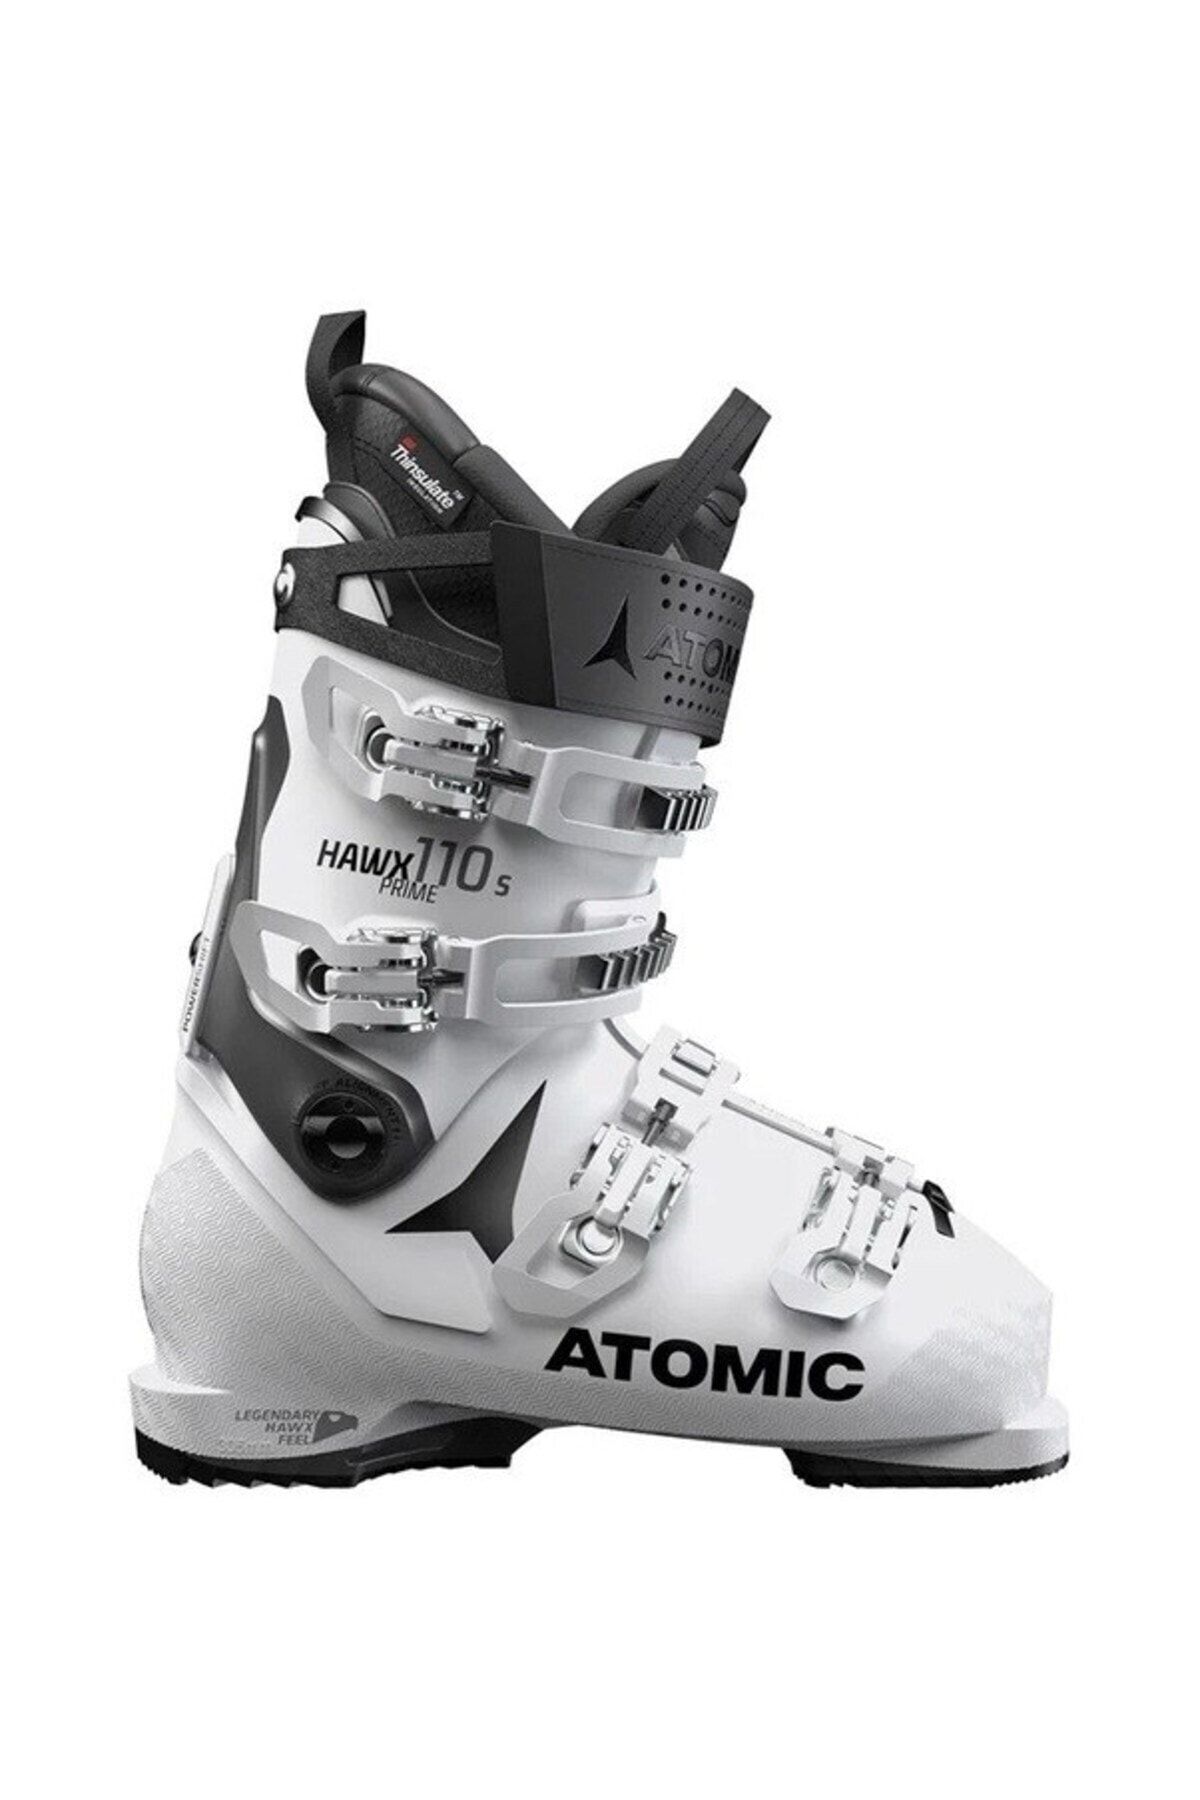 Atomic ATOMİC Bot Hawx Prime 110 S White/Anthracite